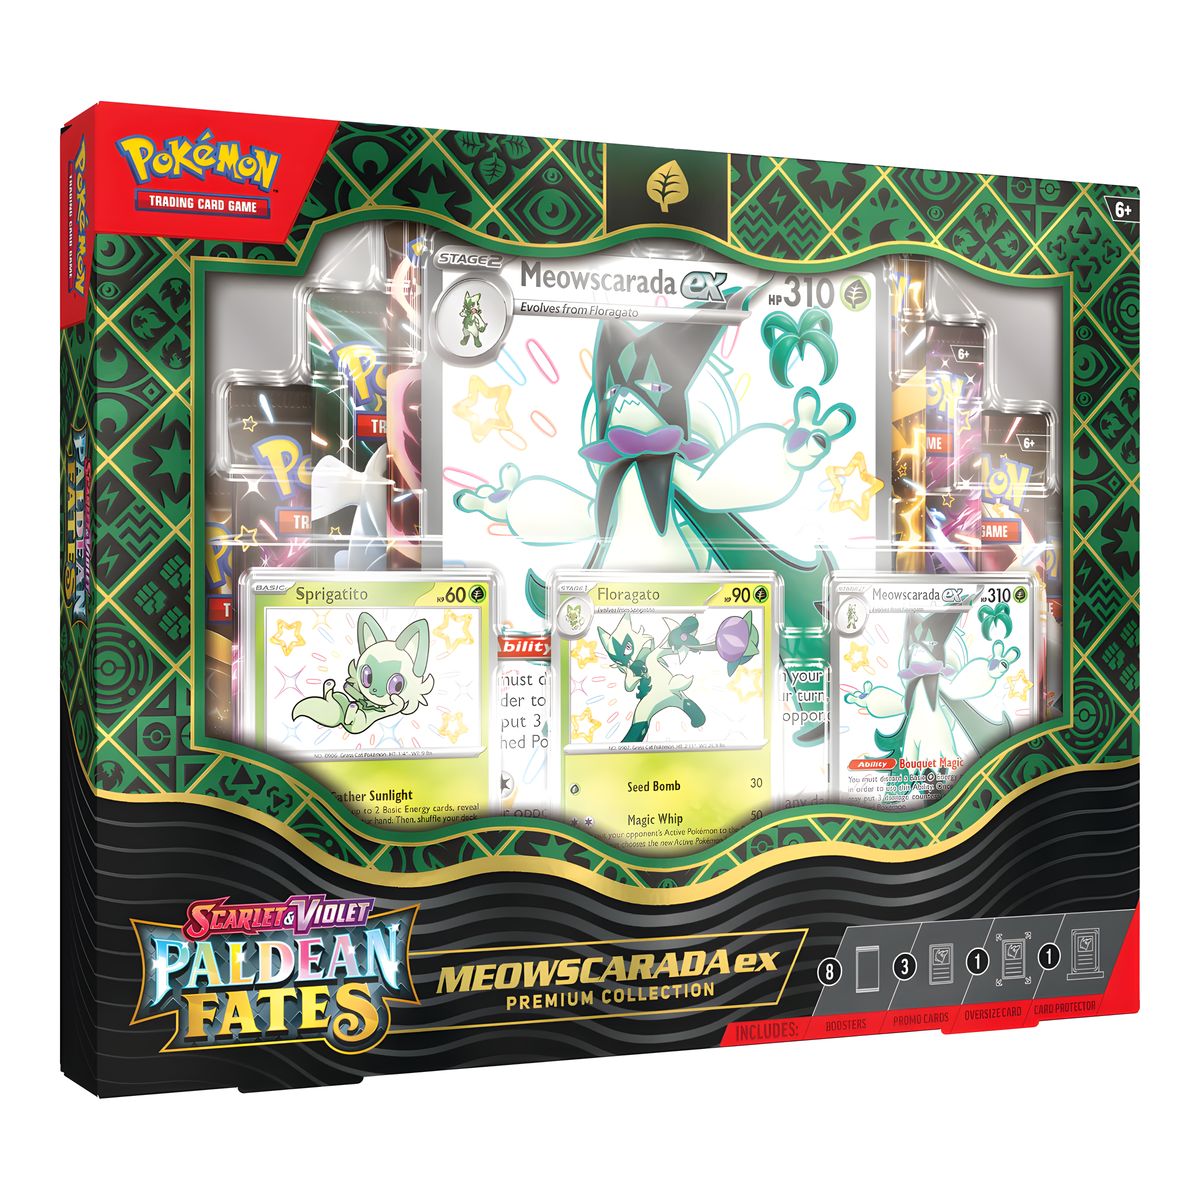 Pokémon - Paldean Fates Premium Collection - Meowscarada